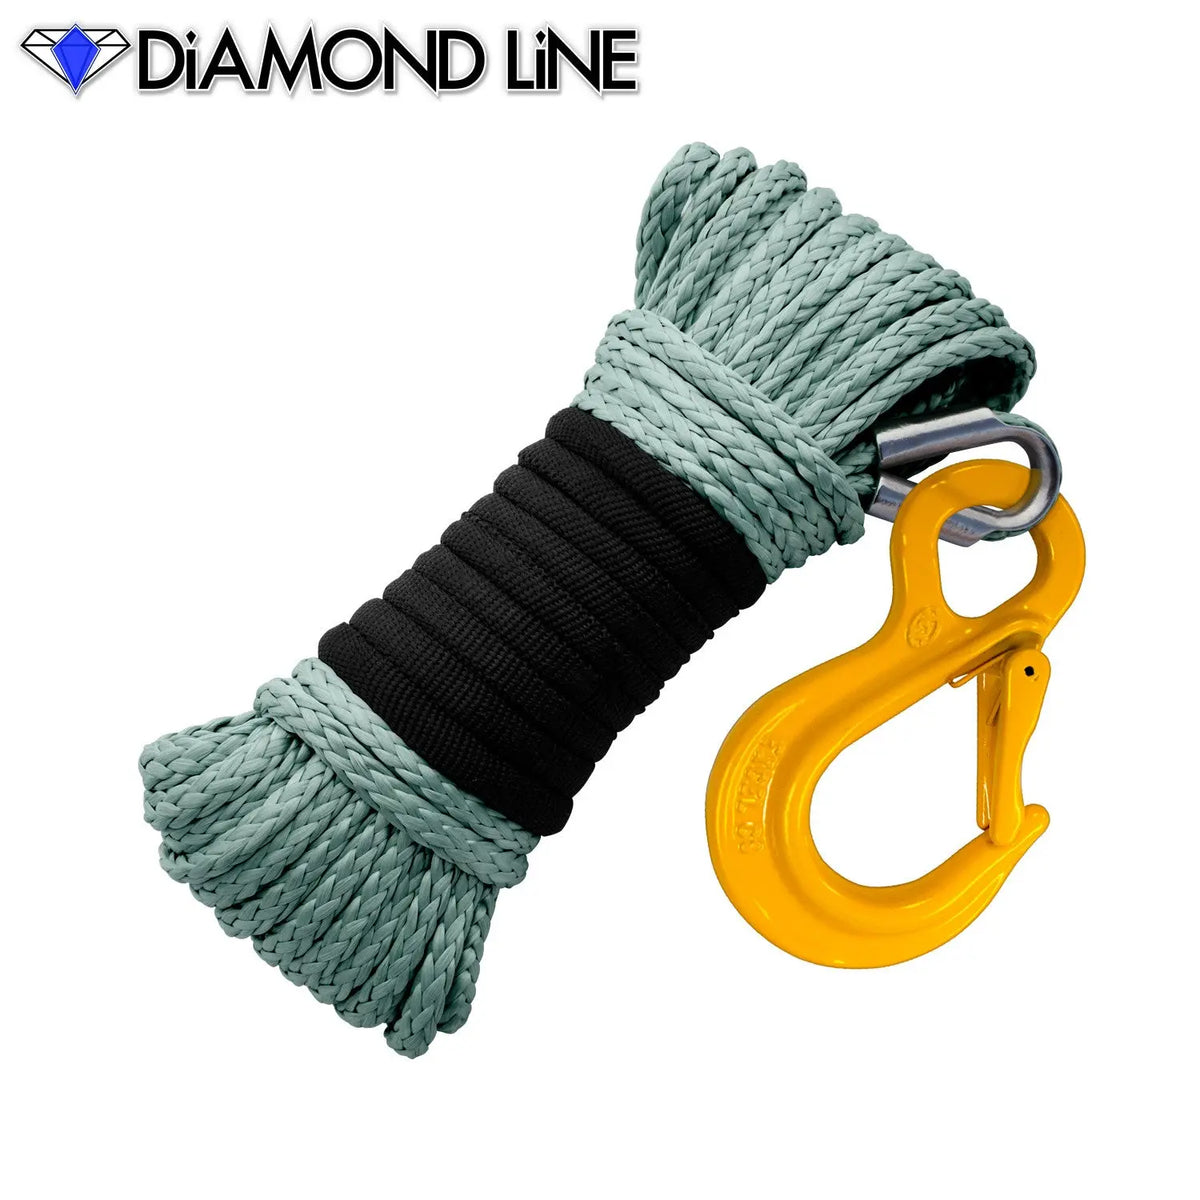 3/16" x 50' Diamond Line Winch Rope Mainline - Dark Pewter with Hook. 